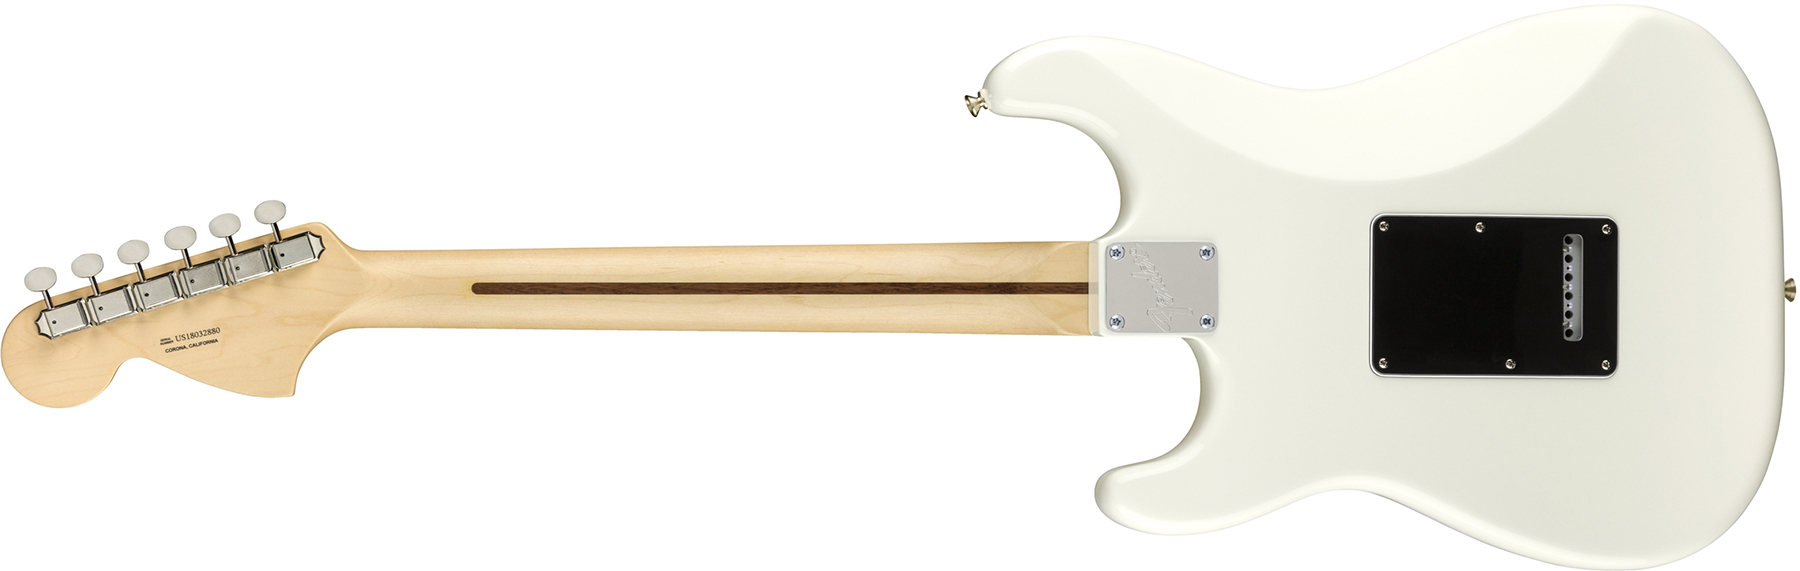 Fender Strat American Performer Usa Sss Rw - Arctic White - Str shape electric guitar - Variation 2